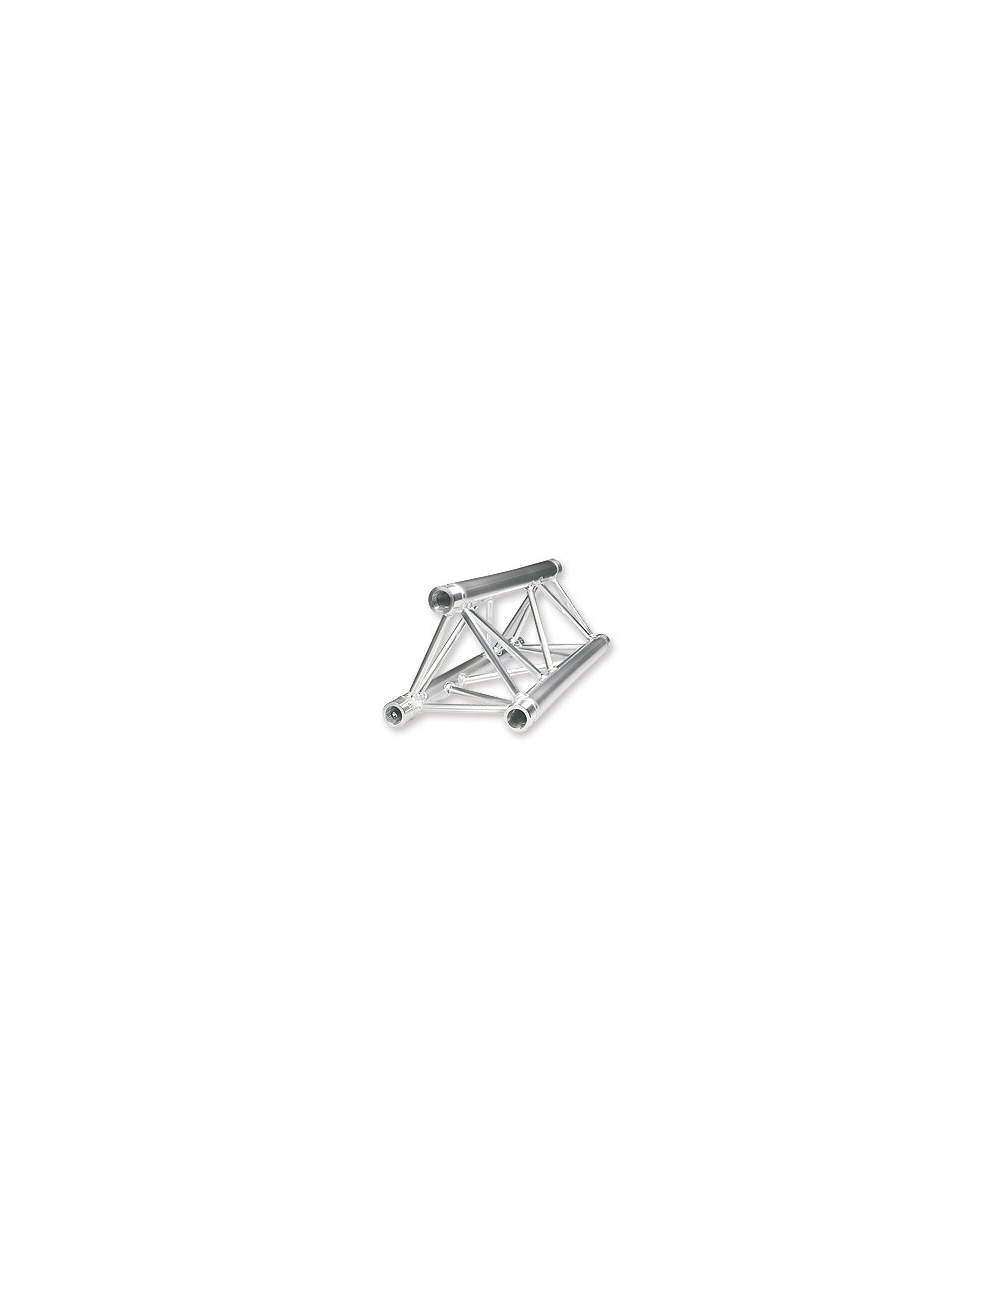 Structure triangulaire 290 ASD 0m71 - SX29071